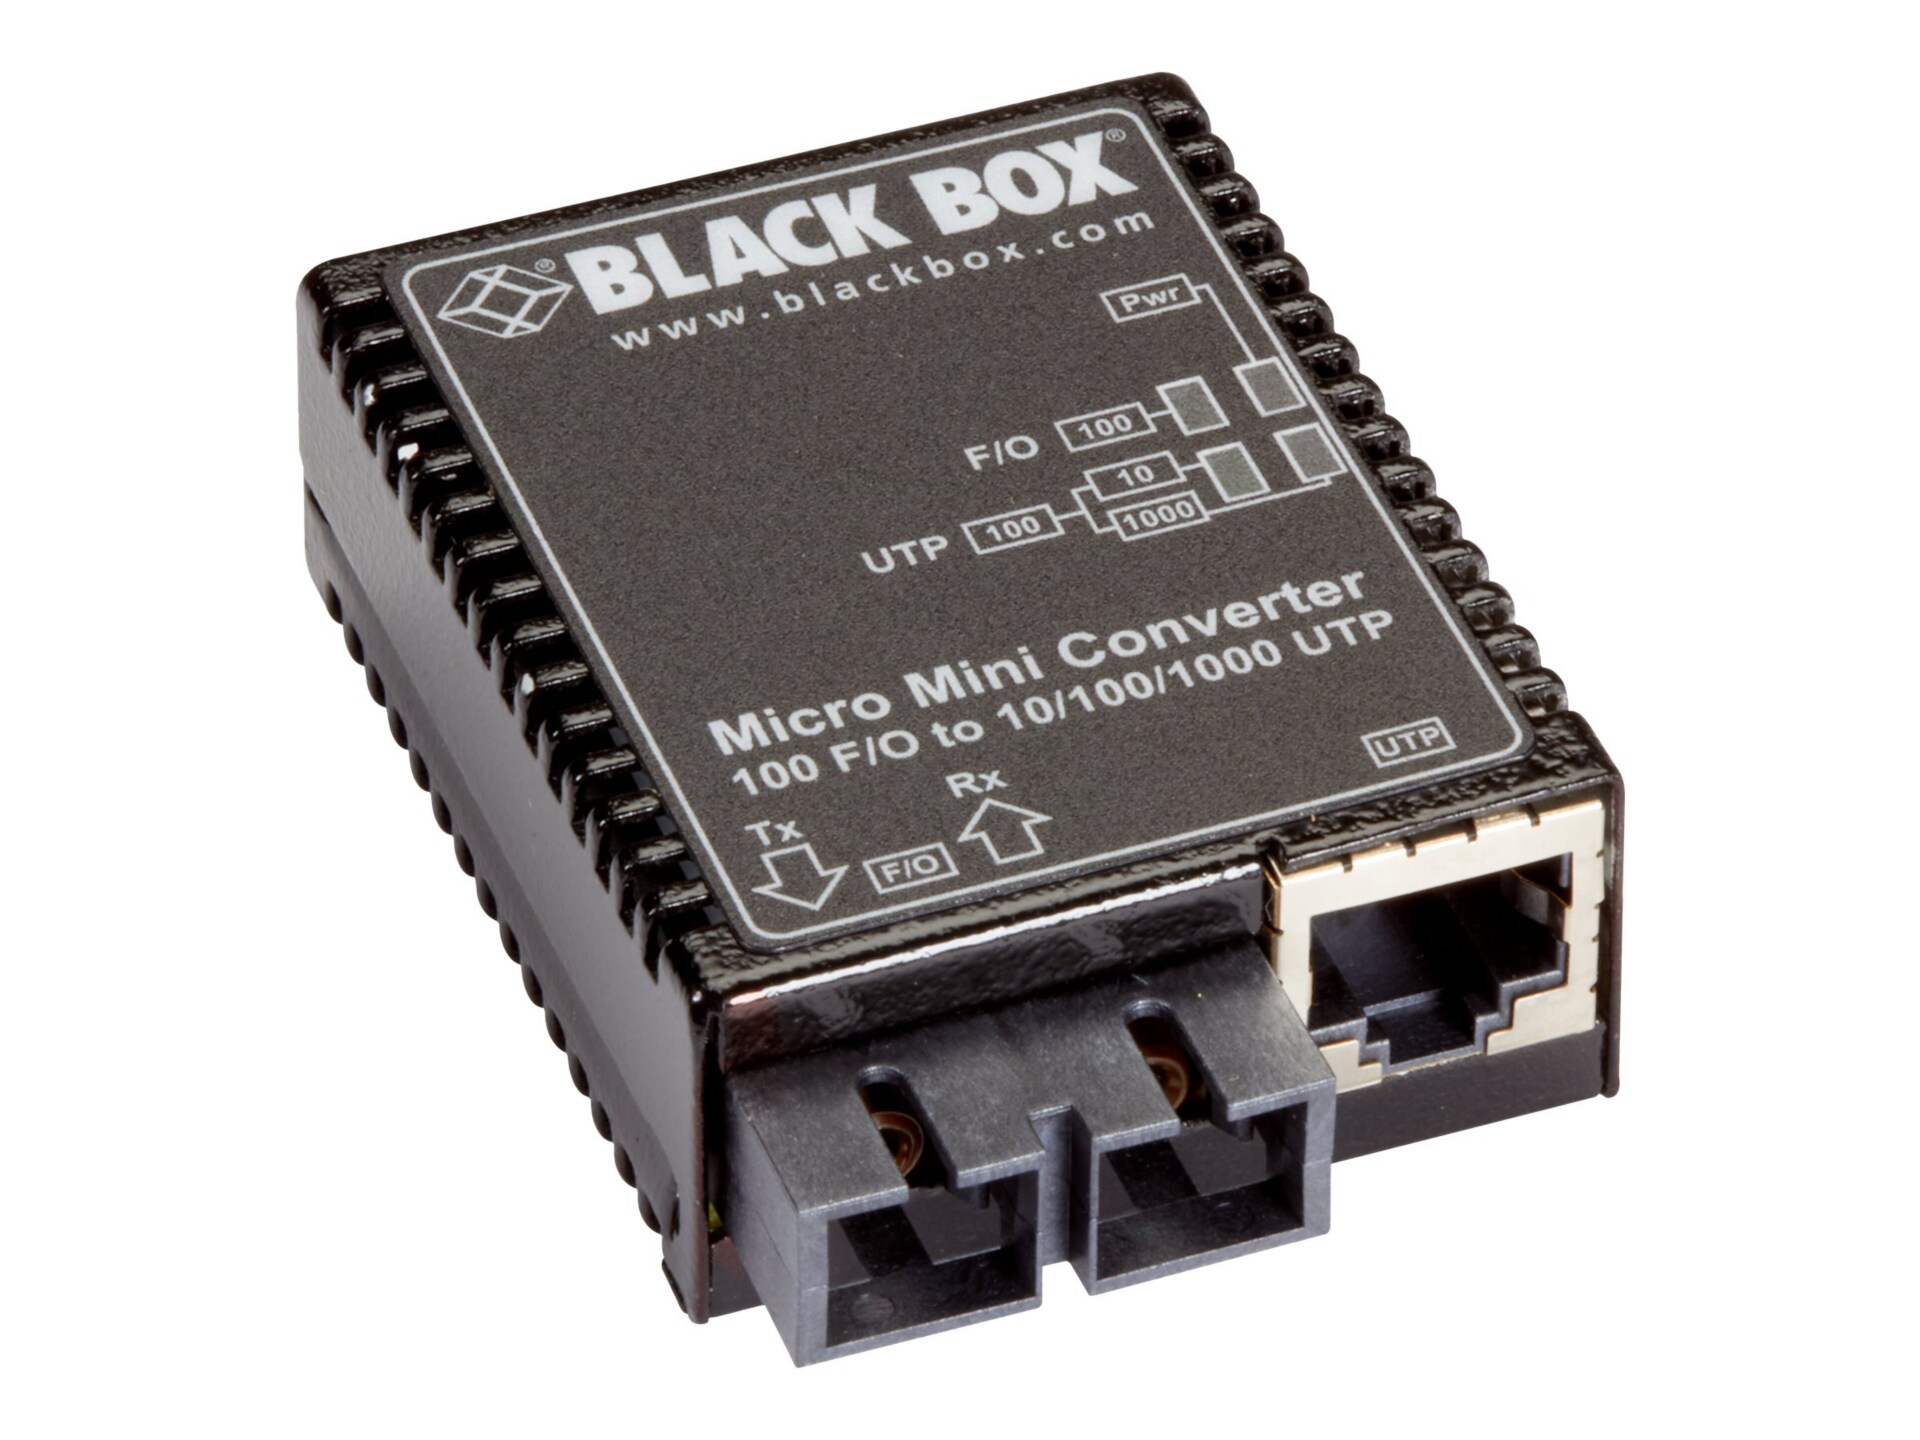 Black Box Micro Mini Media Converter - fiber media converter - 10Mb LAN, 100Mb LAN, GigE - TAA Compliant